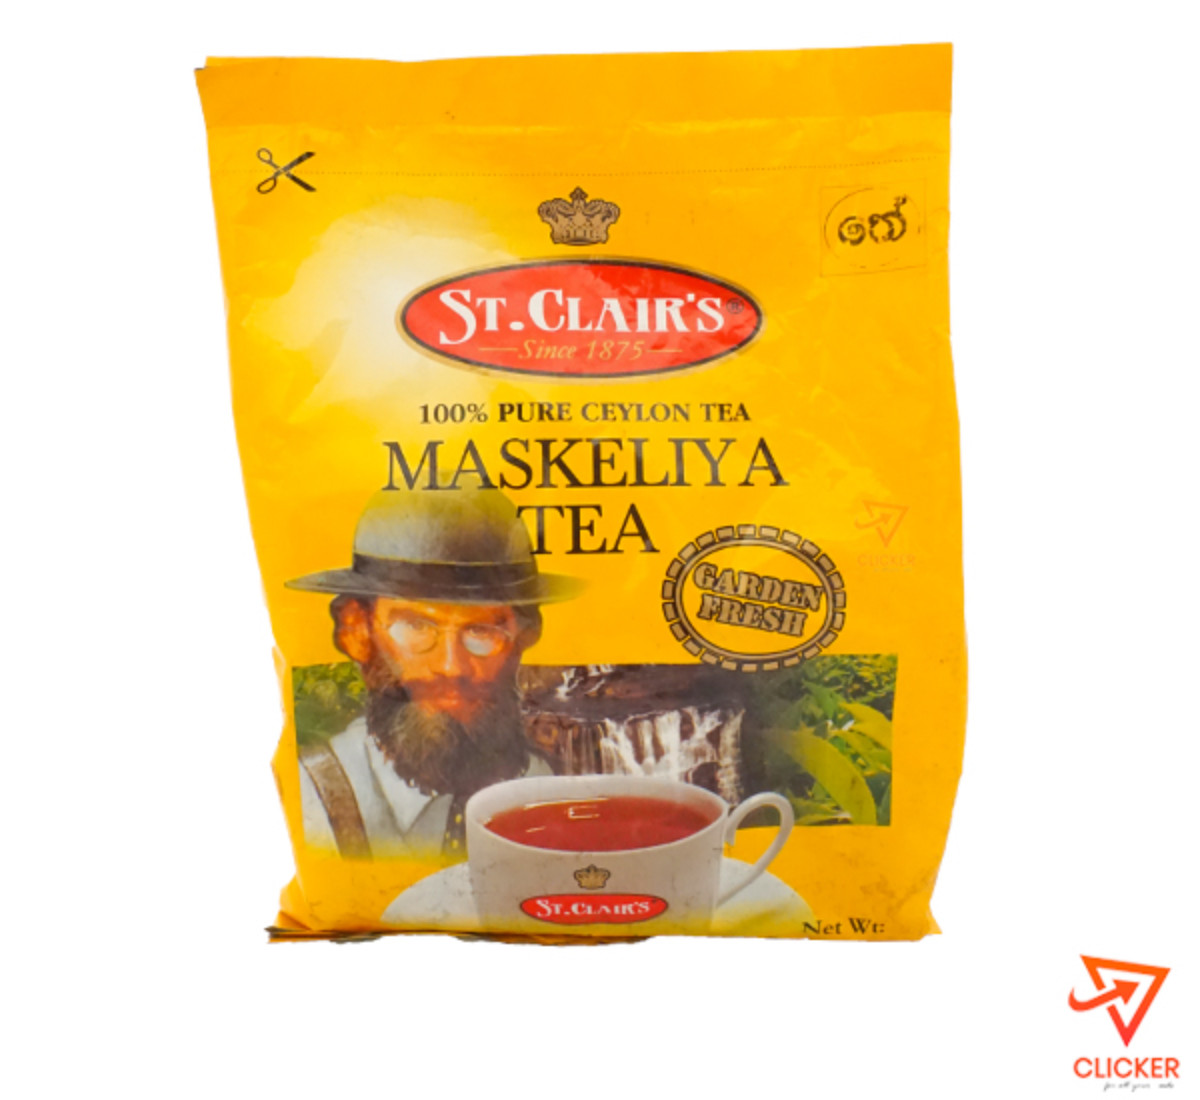 Clicker product 400g ST.CLAIR'S MASKELIYA Tea 971